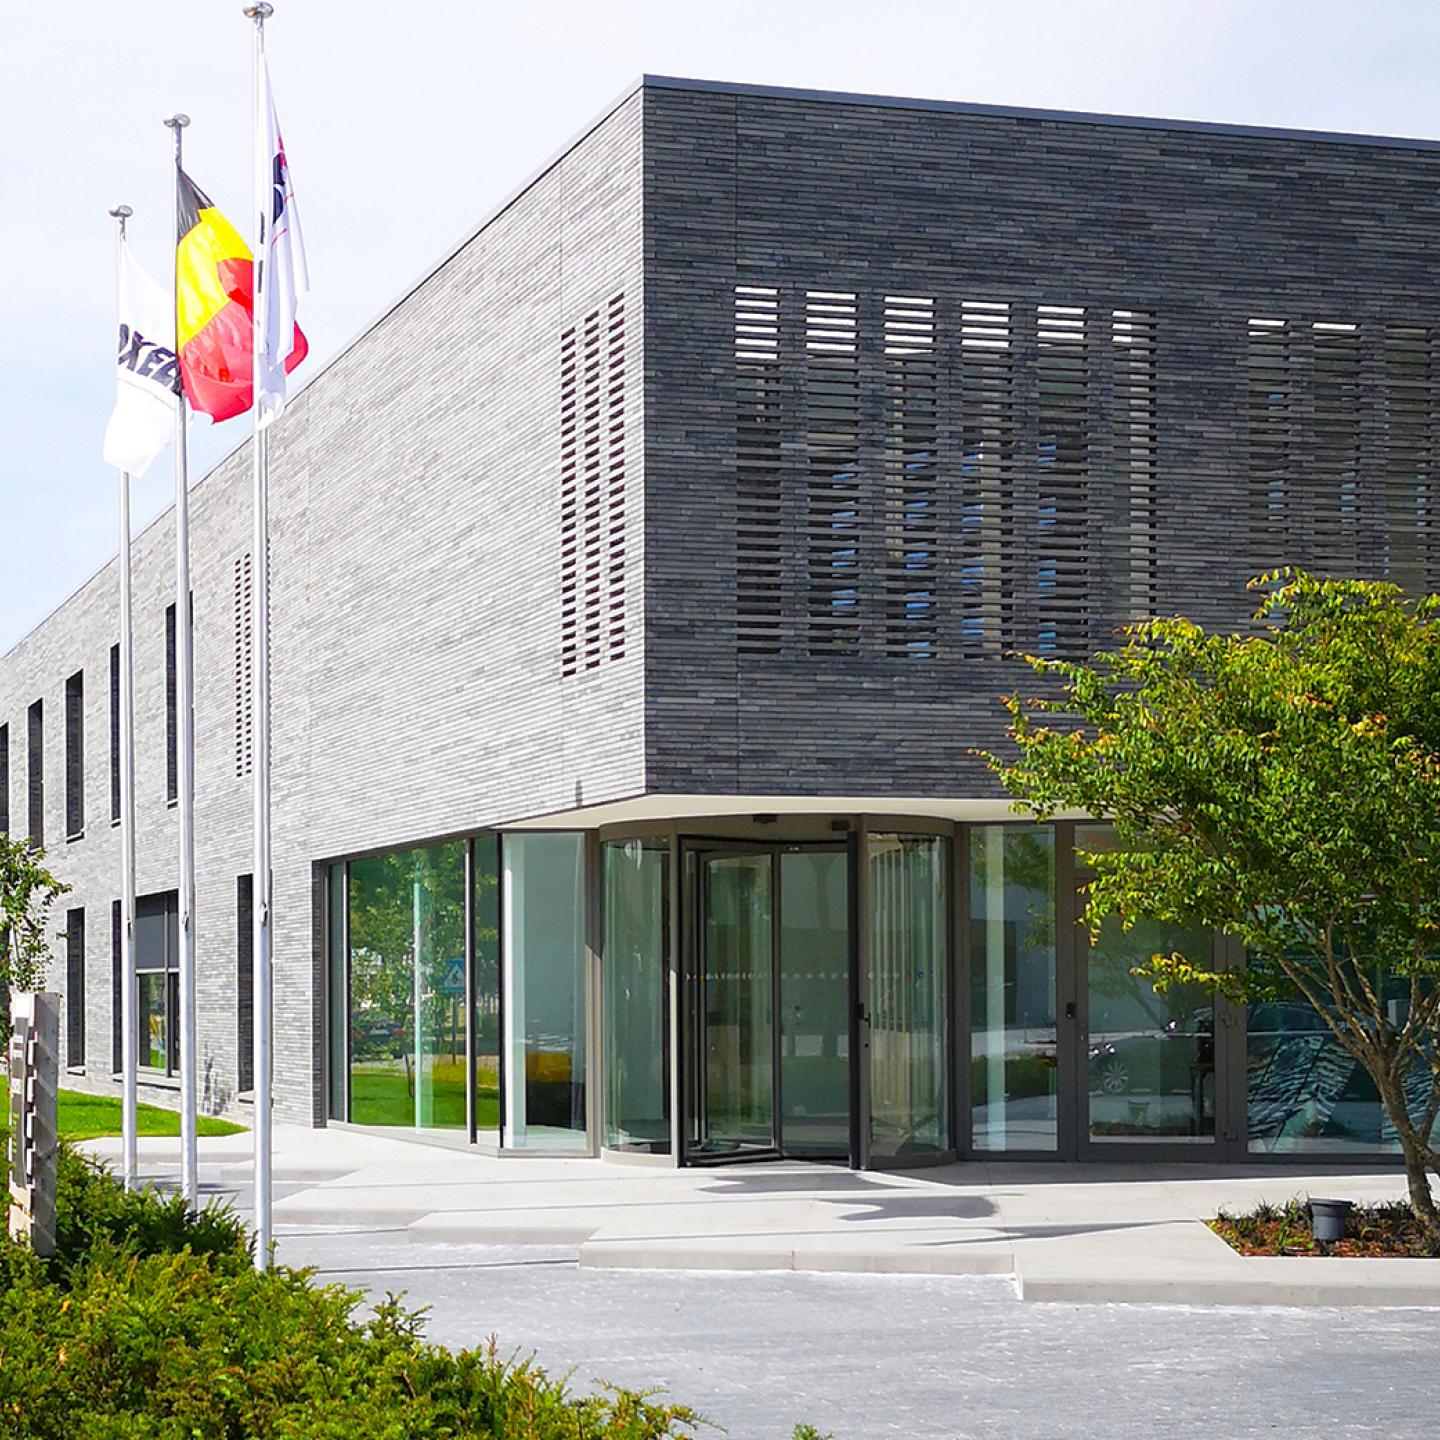 roxell-opens-new-headquarters-maldegem-belgium